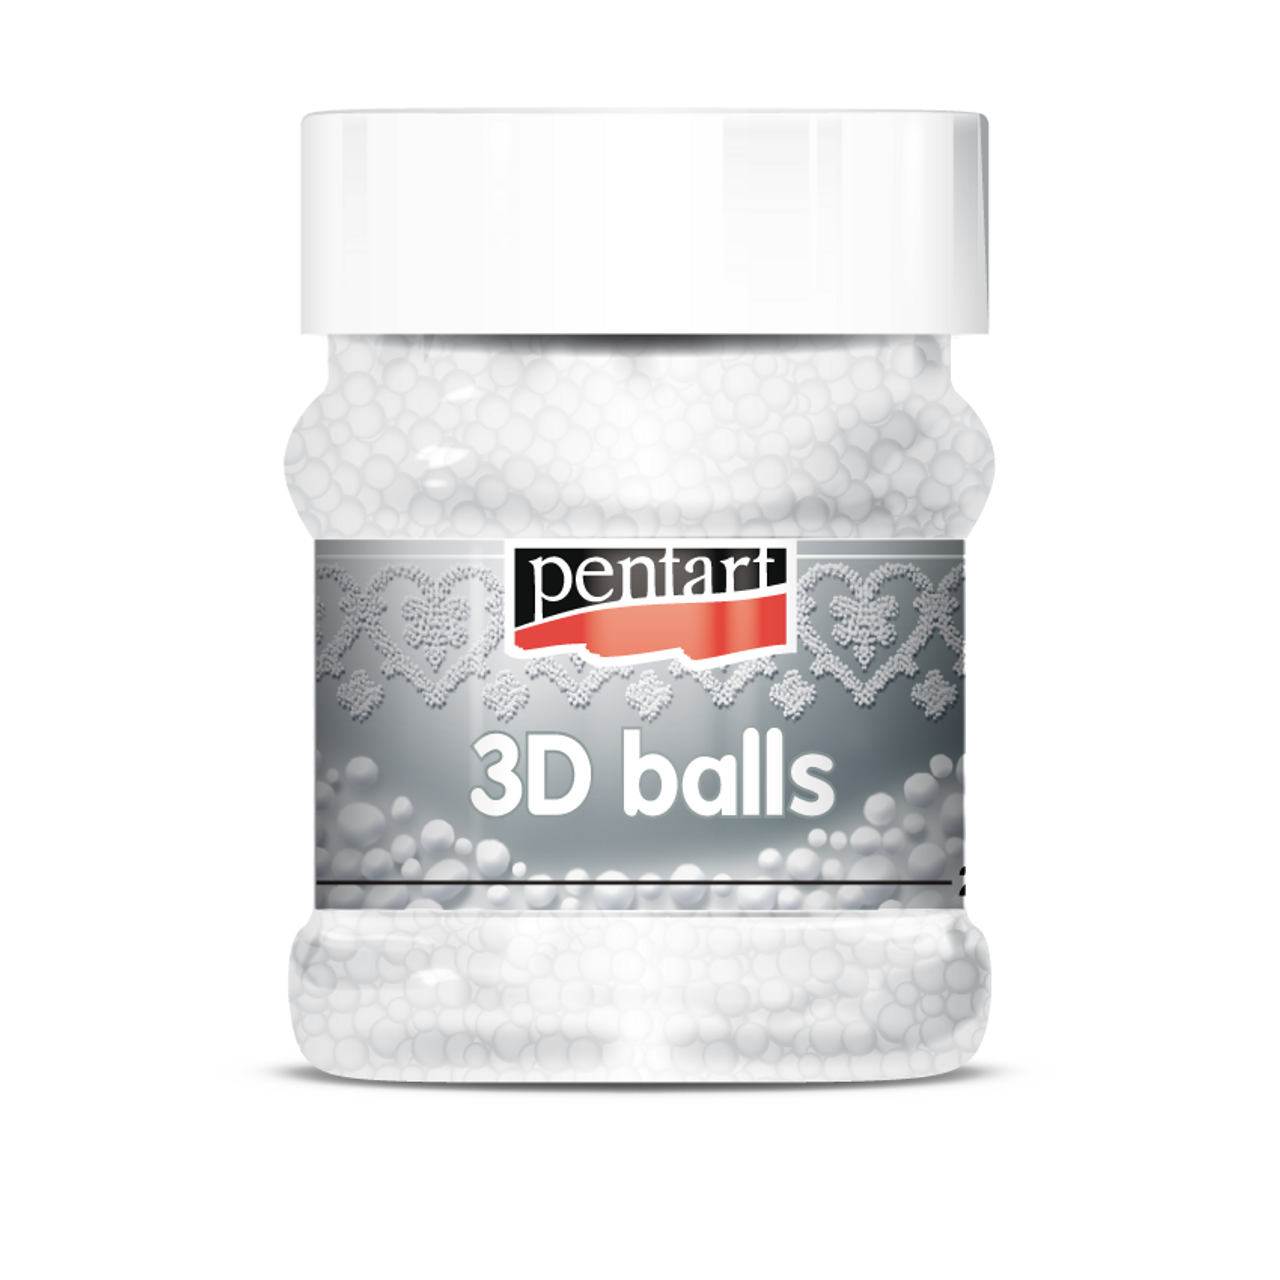 Pentart 3D Balls and powder